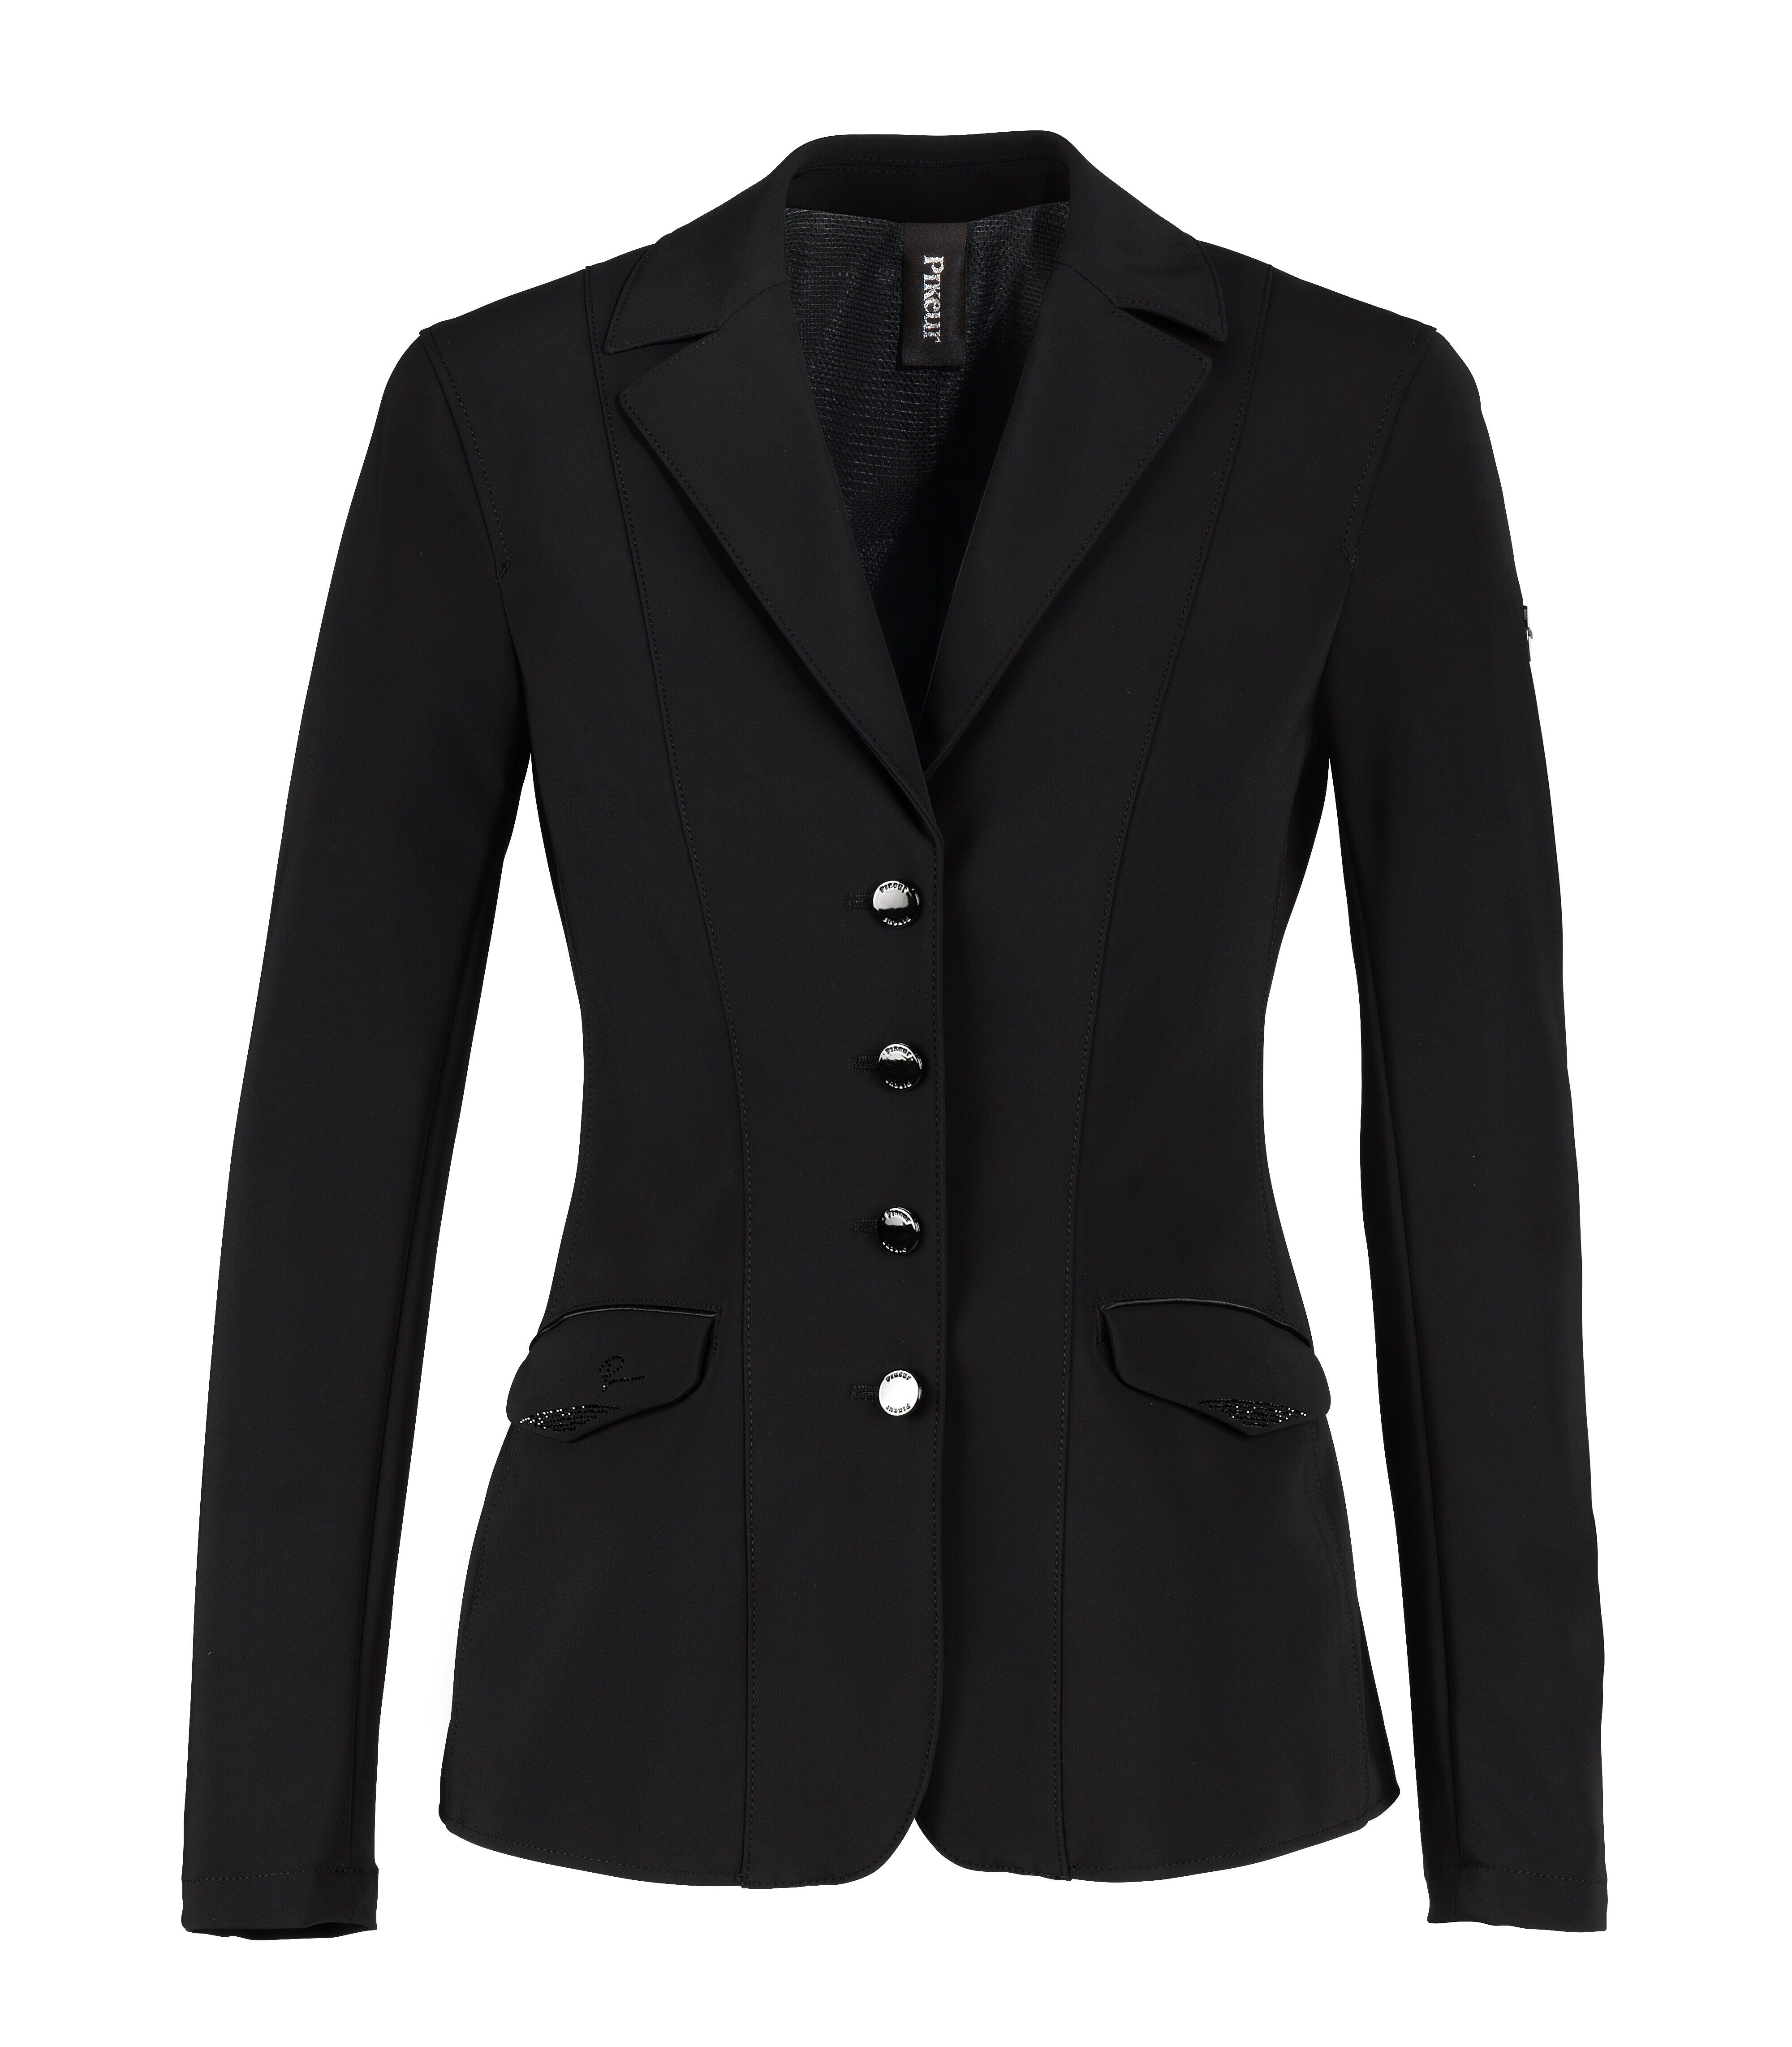 Isalie Competition jacket - Black